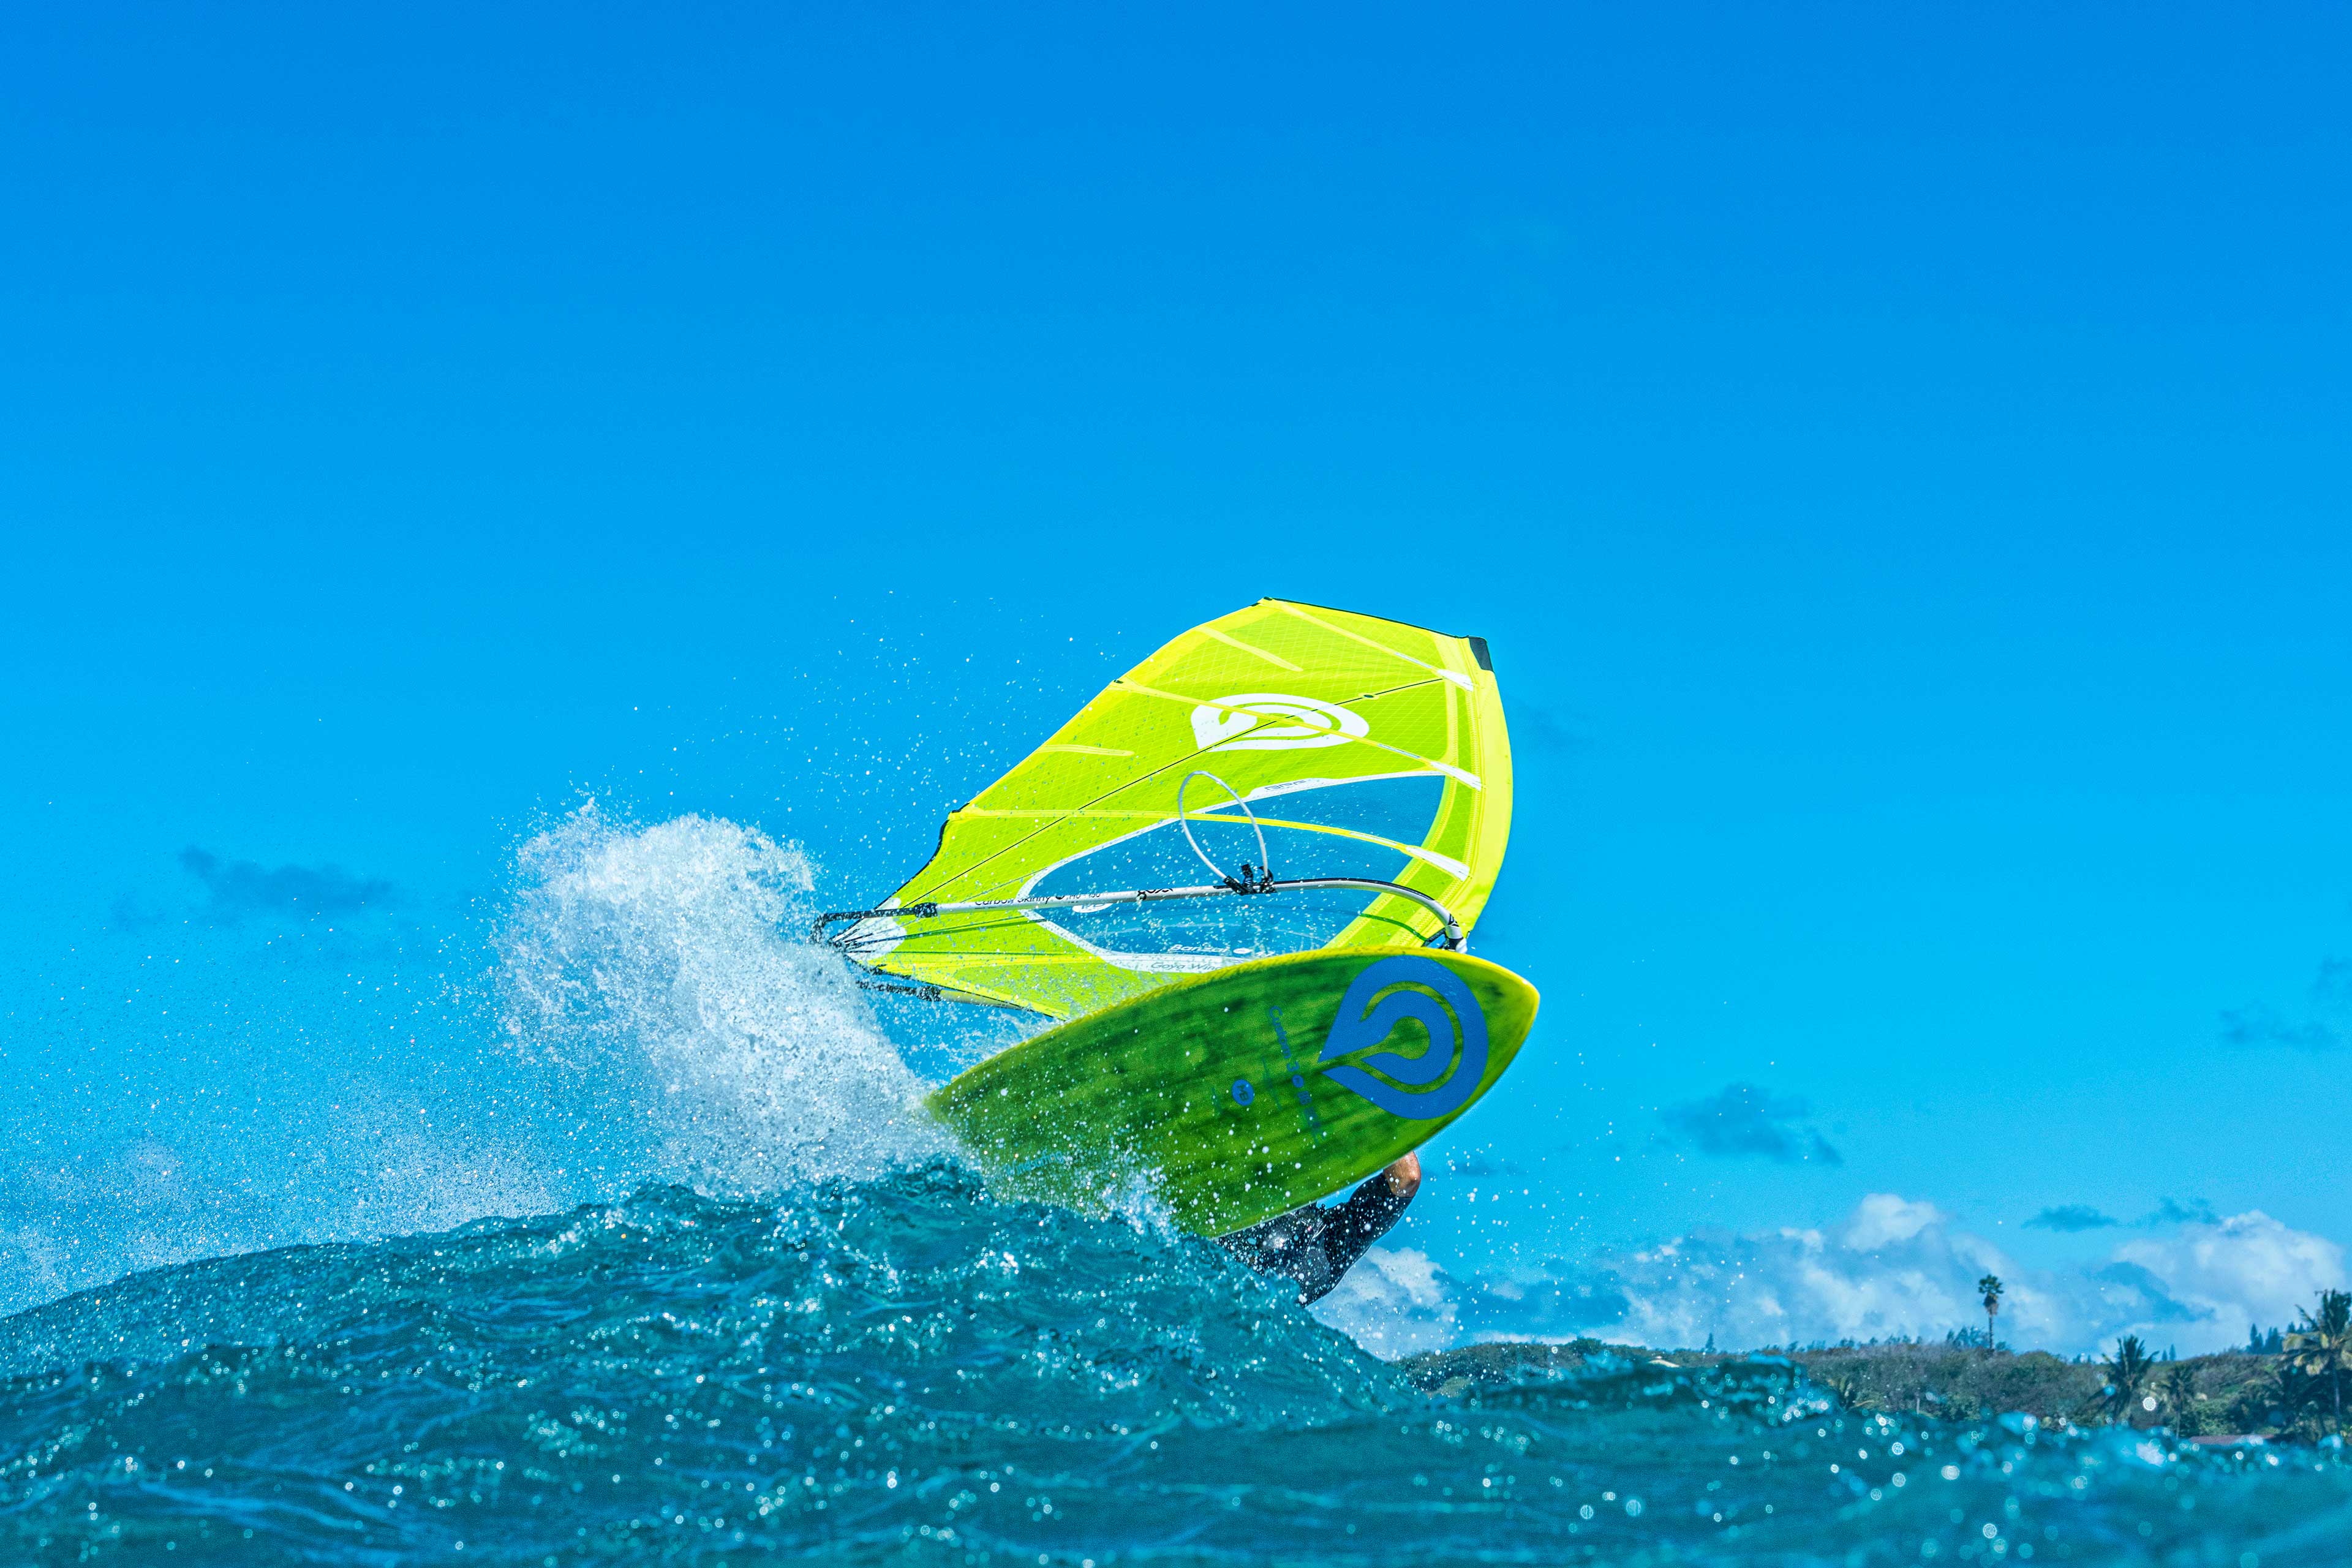 Goya Custom 3 Pro Surfwave Windsurf Board